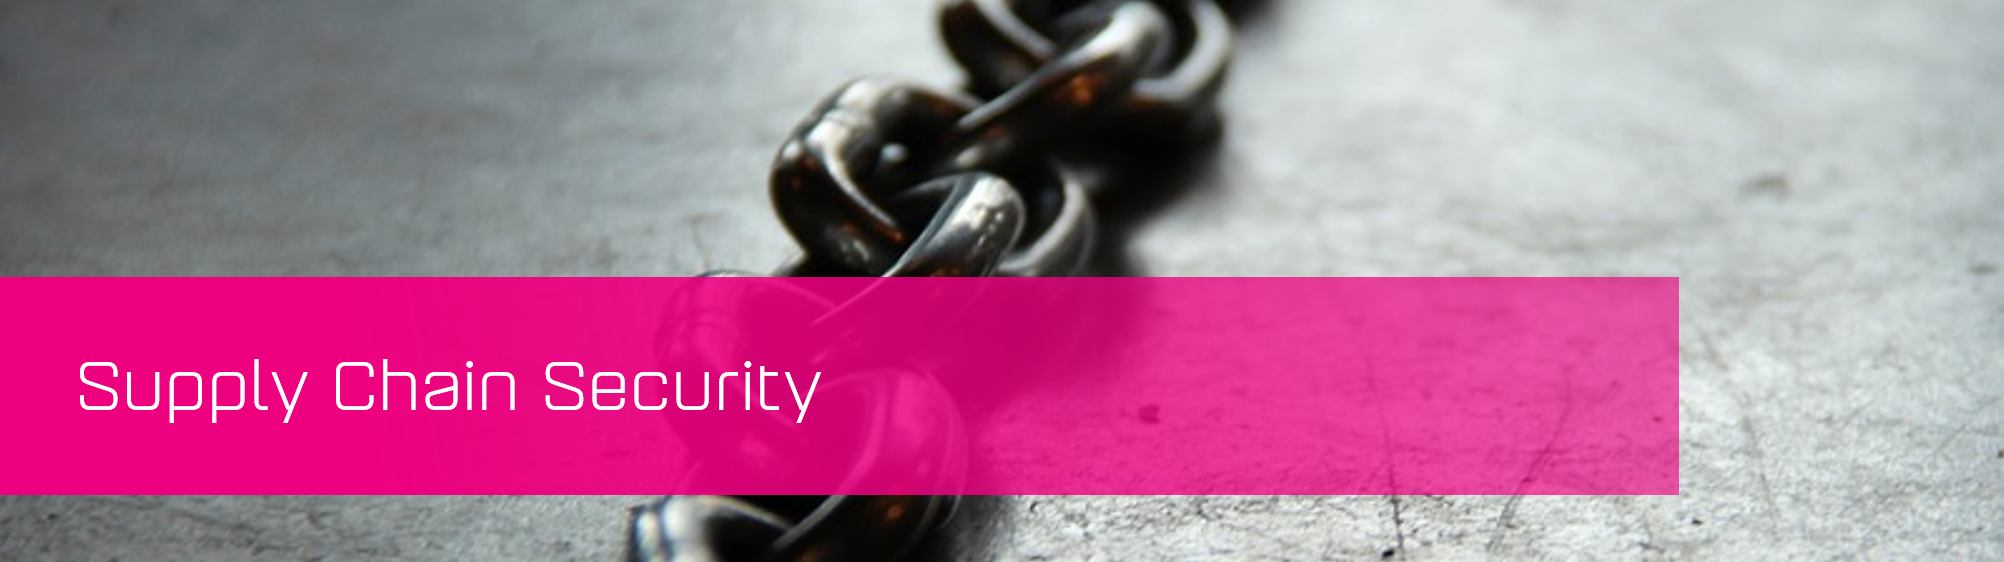 KCS SA - Blog - ERP Supply Chain Security